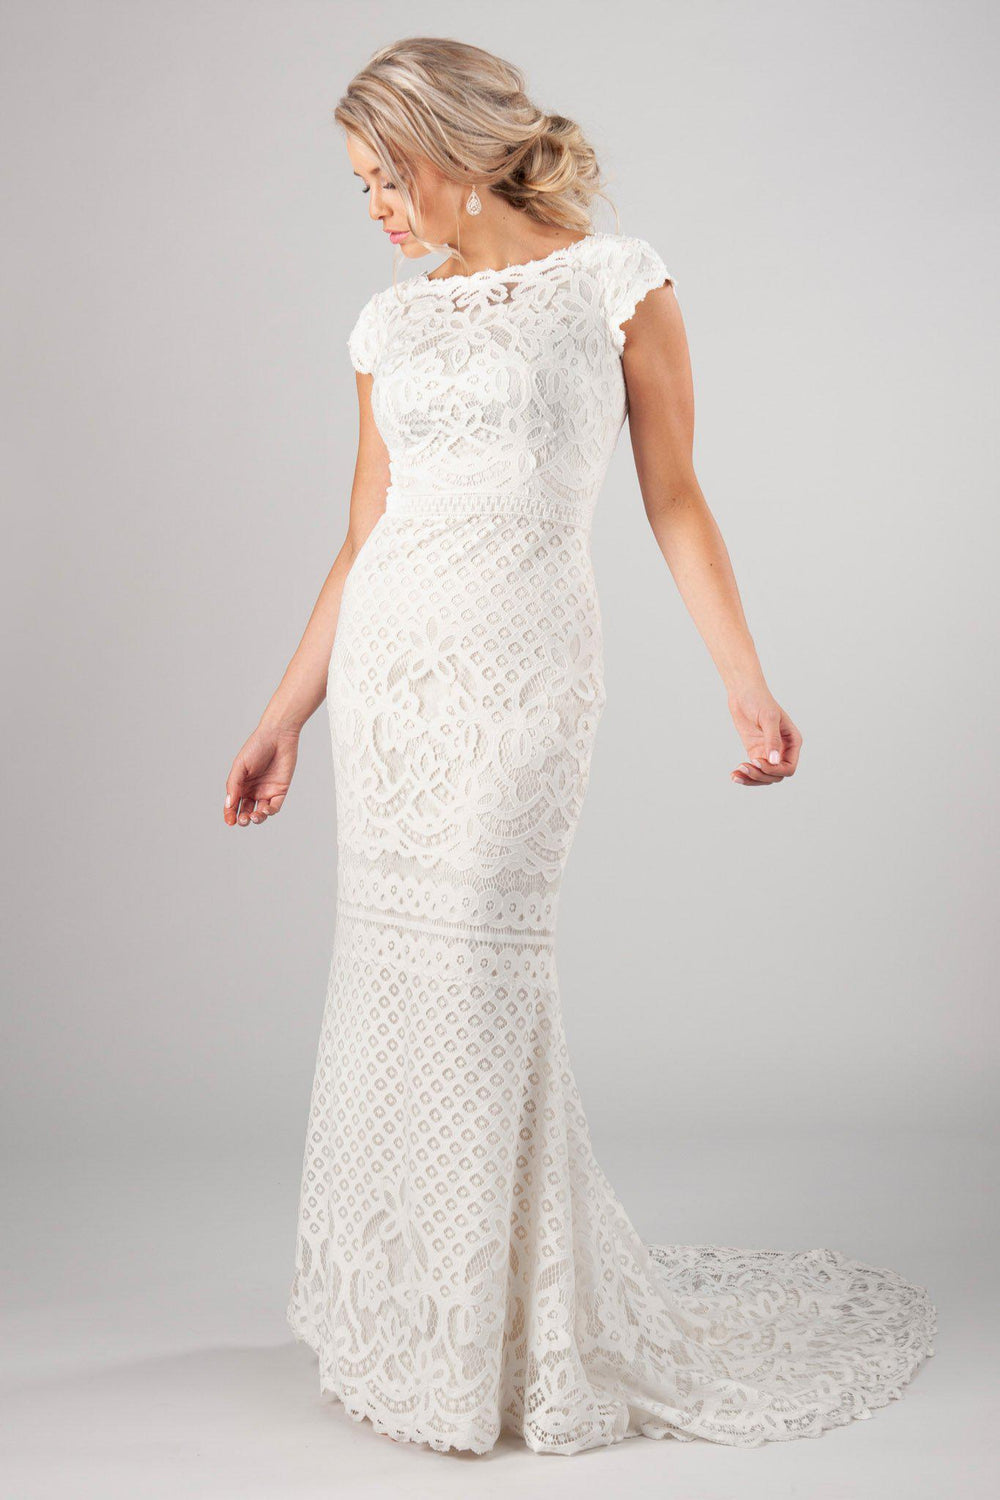 Mormon Dresses: The Arwen | Bell sleeve wedding dress, Modest wedding  dresses, Wedding dresses strapless